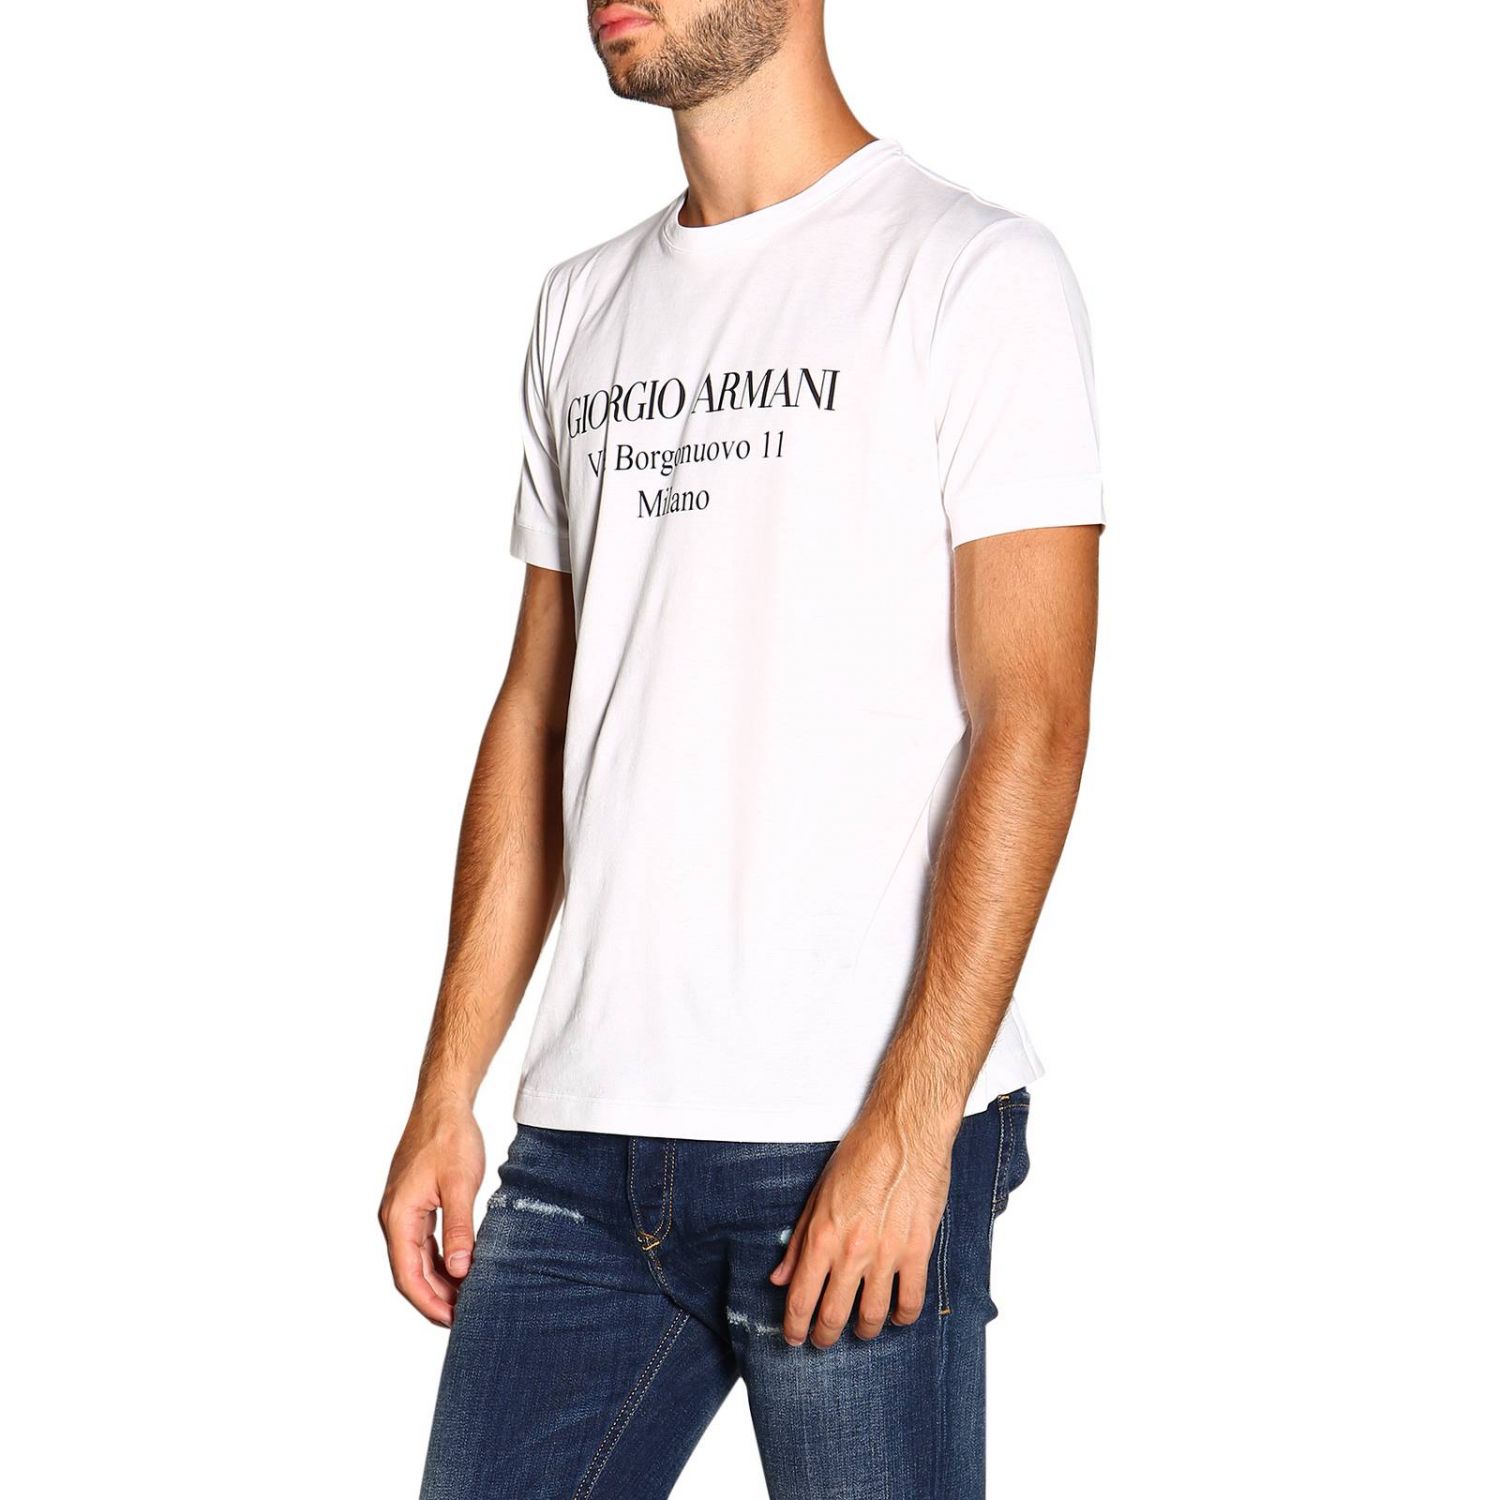 Giorgio Armani Outlet: t-shirt for men - White | Giorgio Armani t-shirt ...